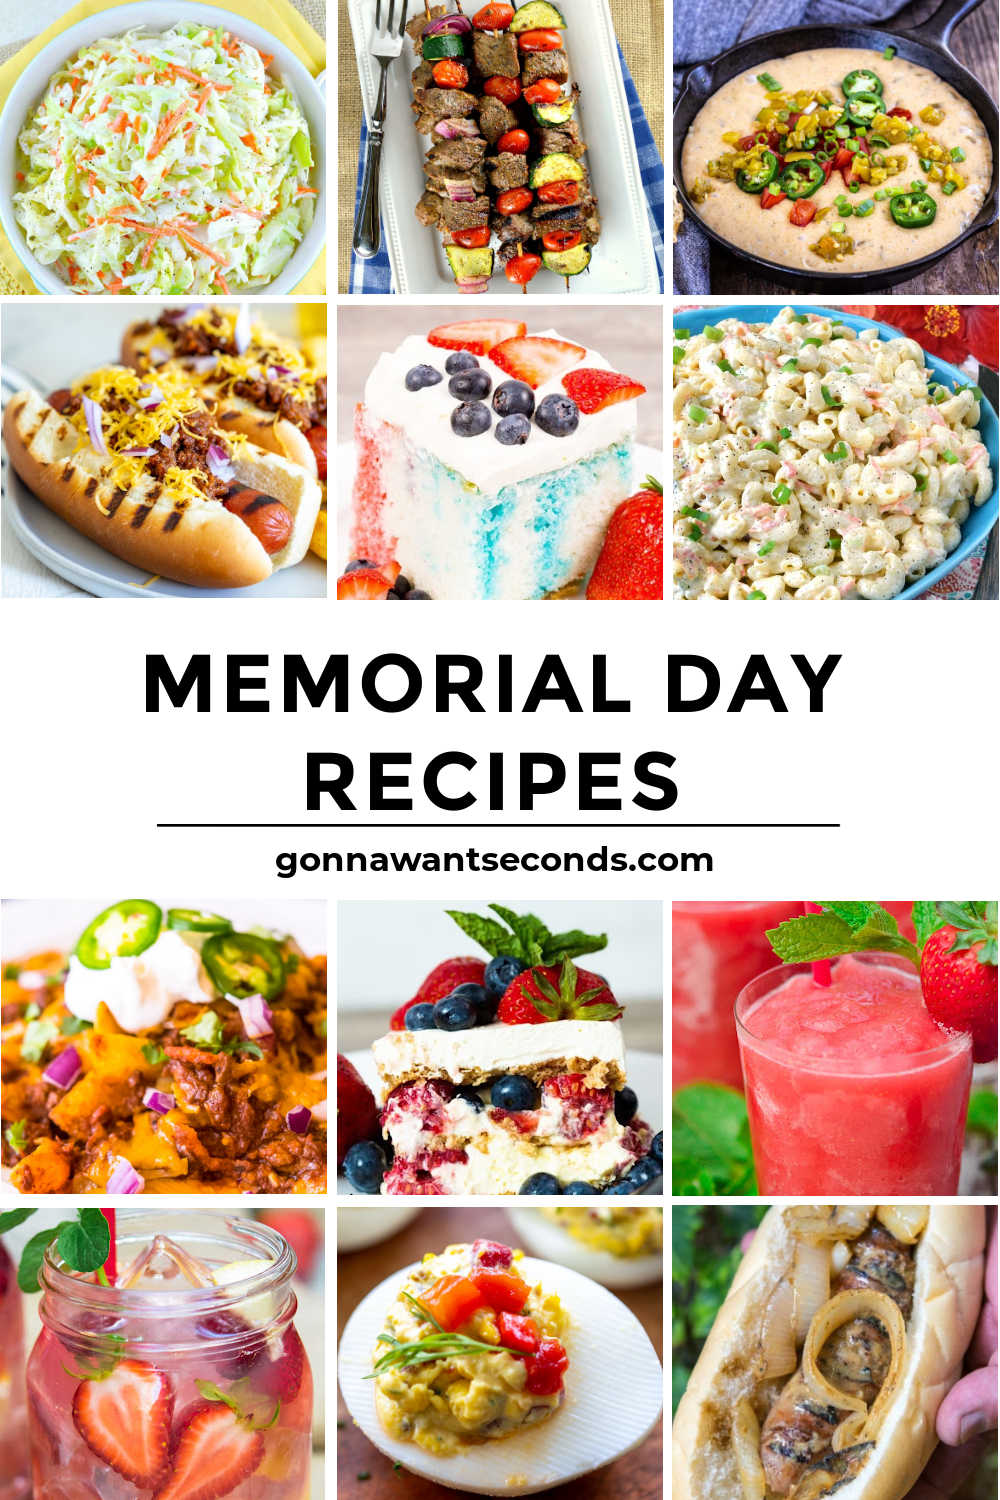 Memorial Day Recipes montage 1